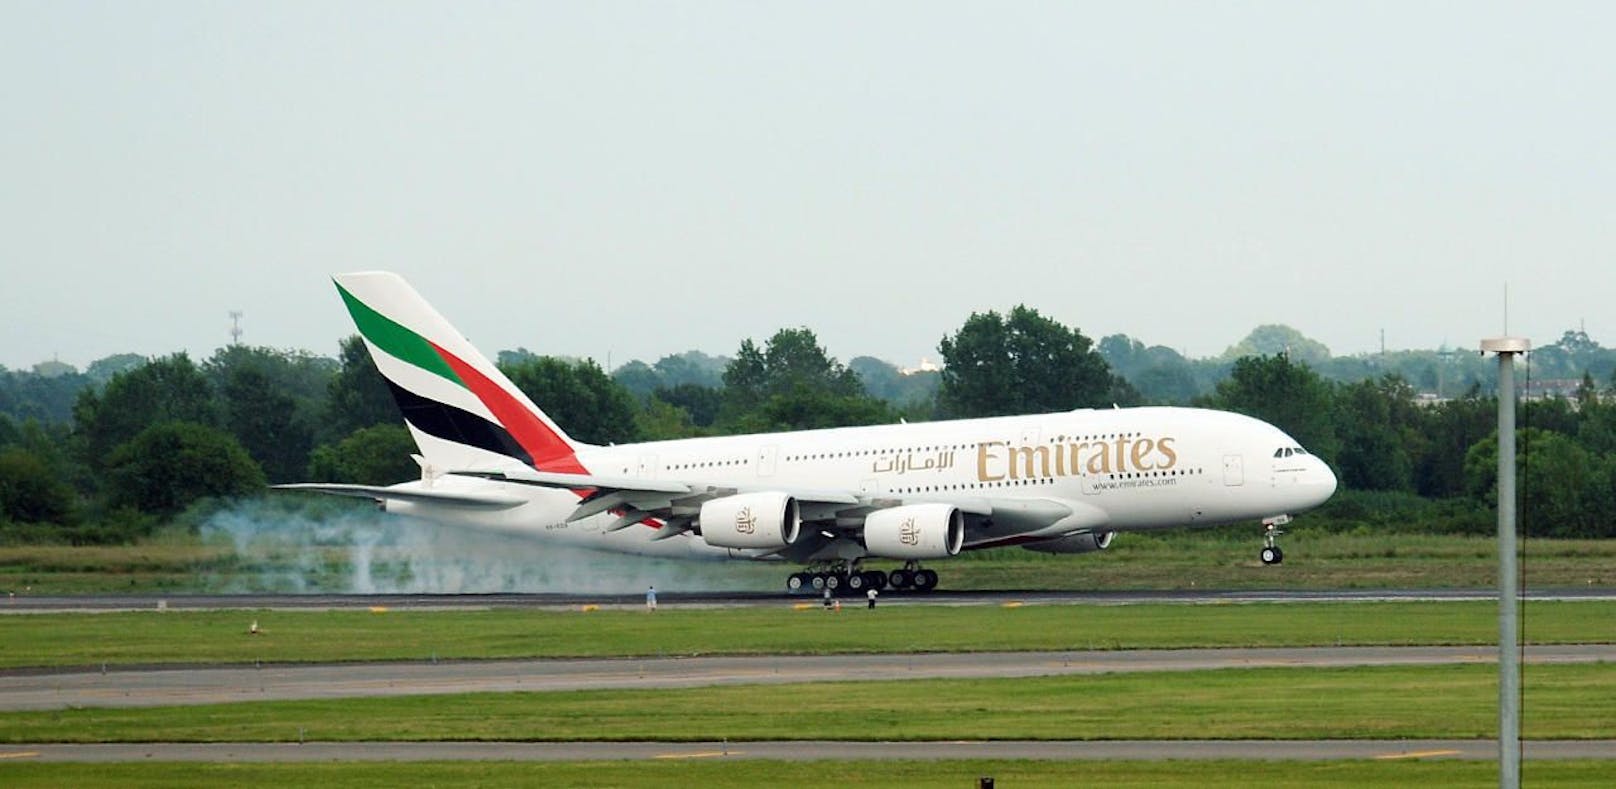 Fast Bruchlandung: Airbus A380 auf falschem Kurs